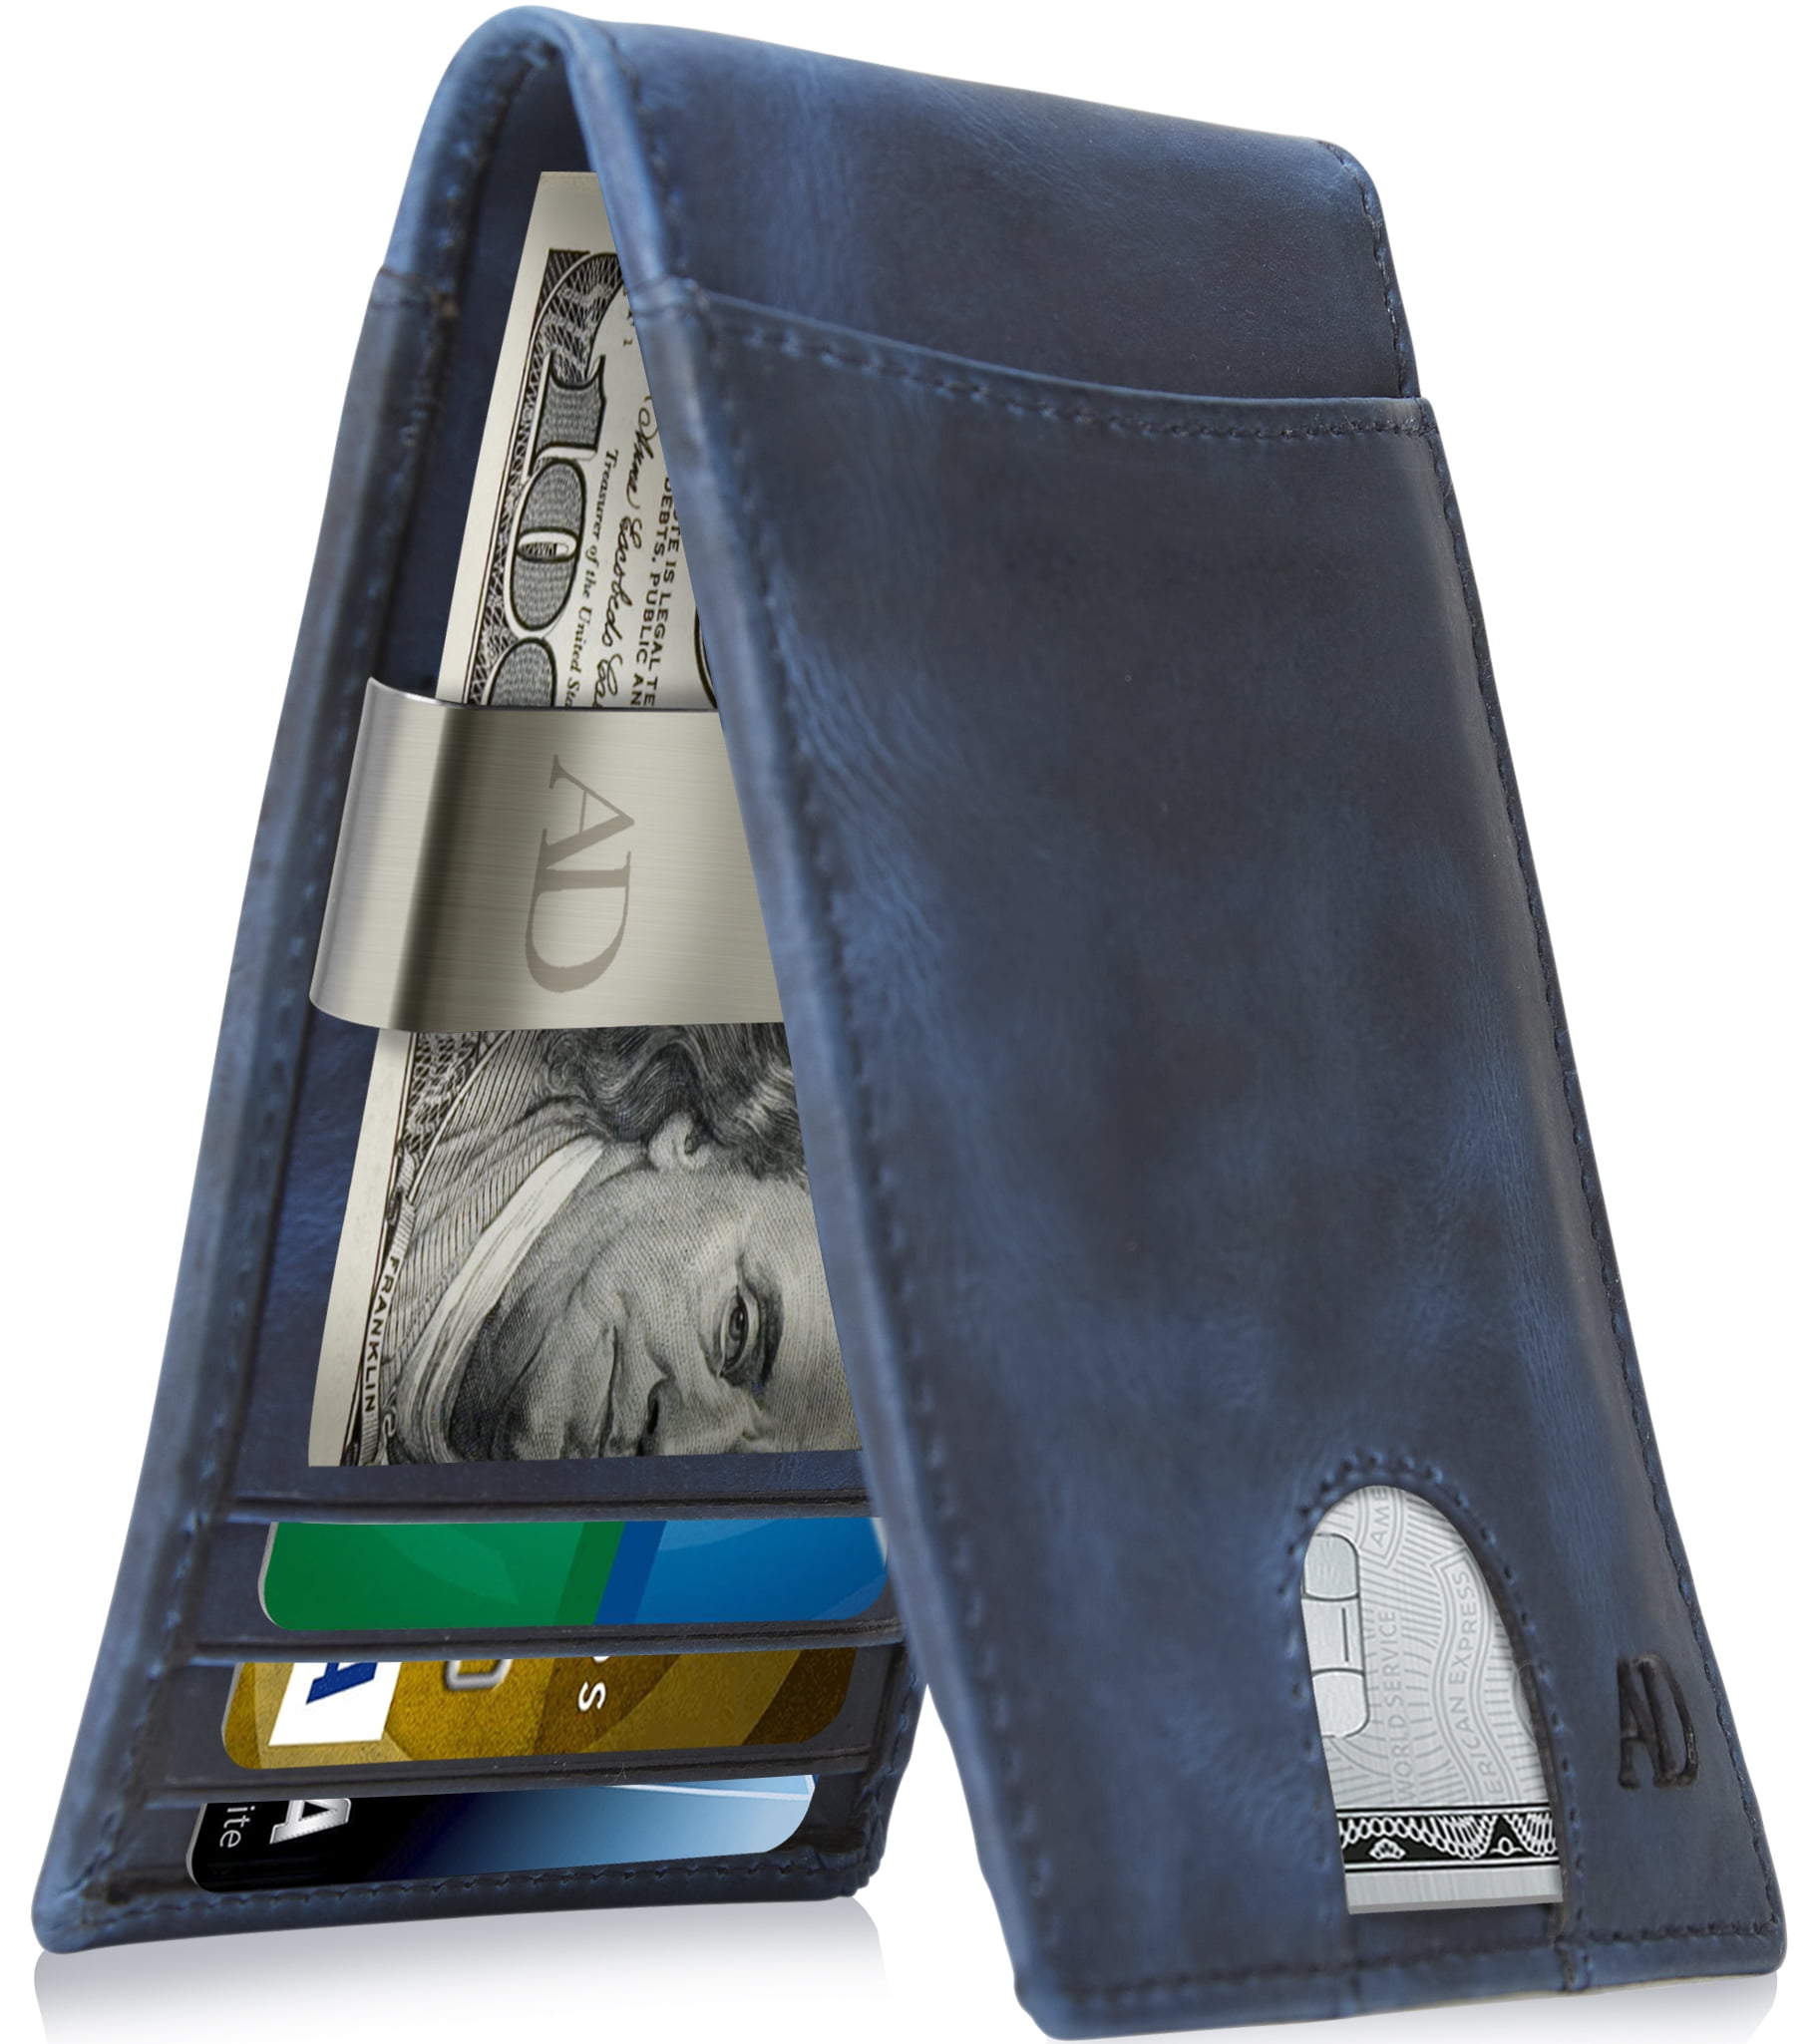 Slim Bifold Wallets For Men - Money Clip Wallet RFID Blocking Front ...